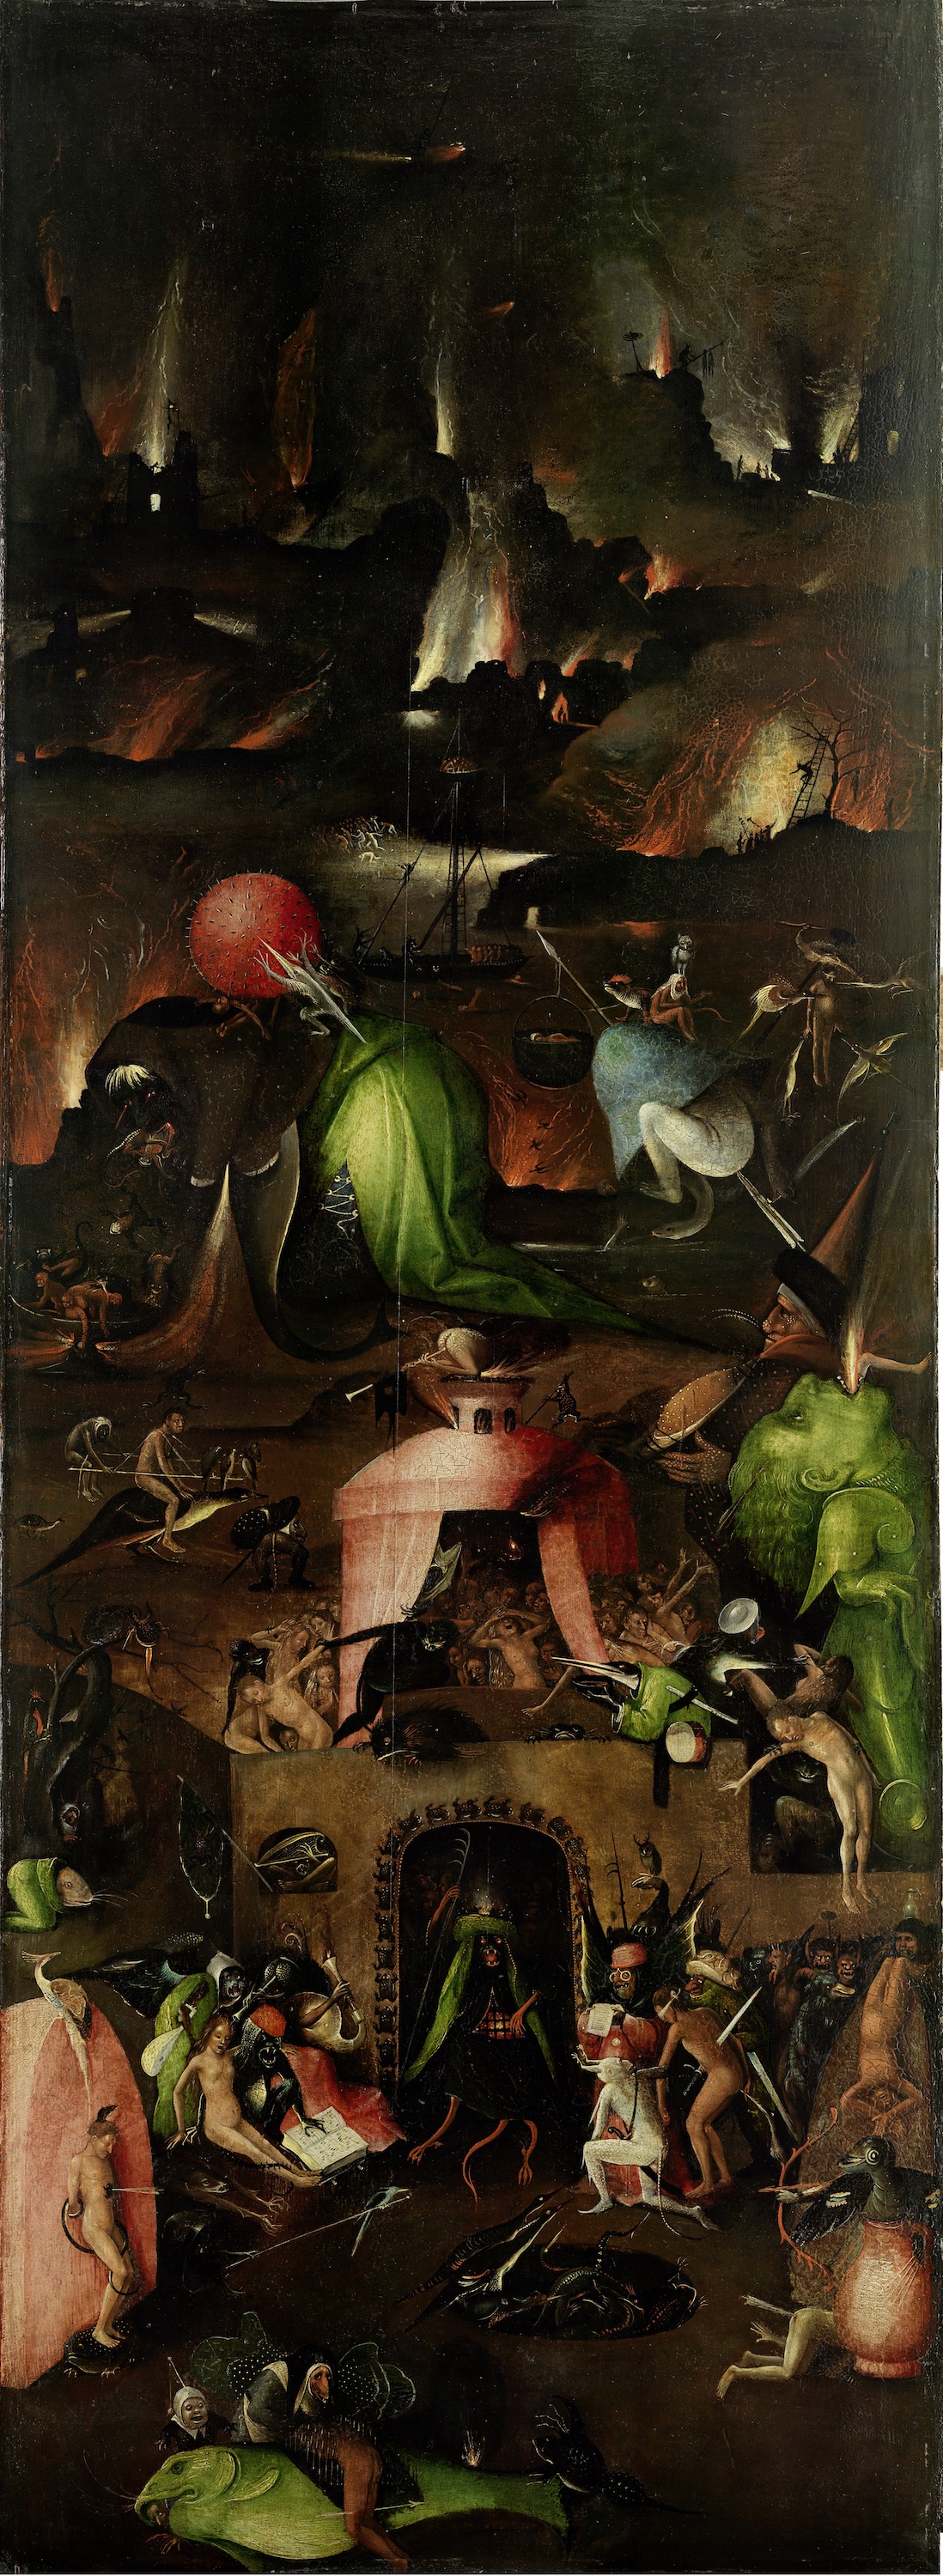 Триптих «Страшний суд» - праве панно by Hieronymus Bosch - близько 1500 